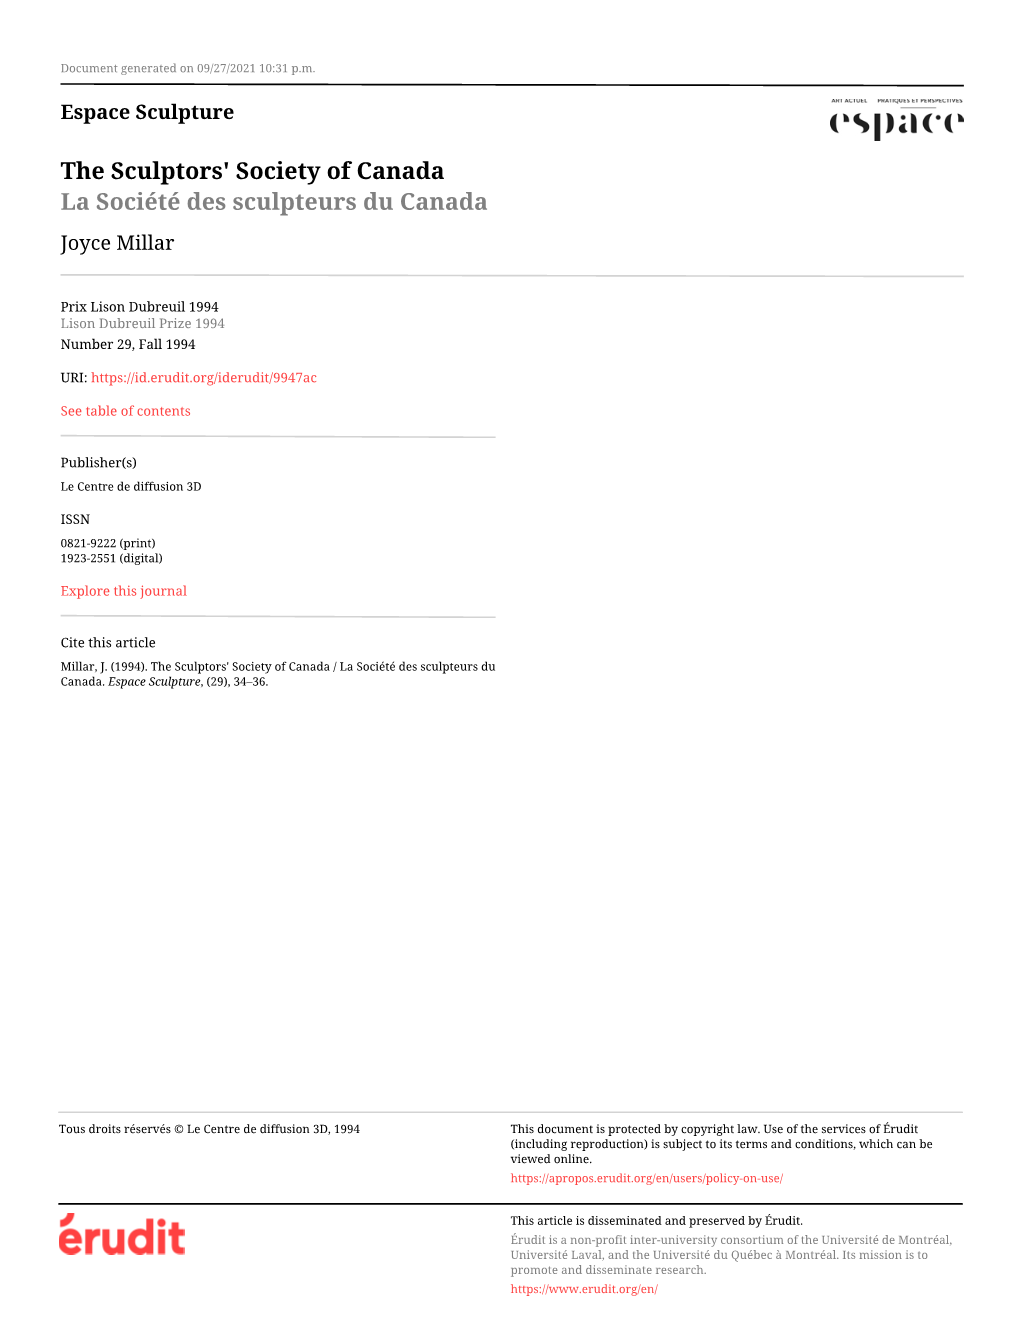 The Sculptors' Society of Canada / La Société Des Sculpteurs Du Canada